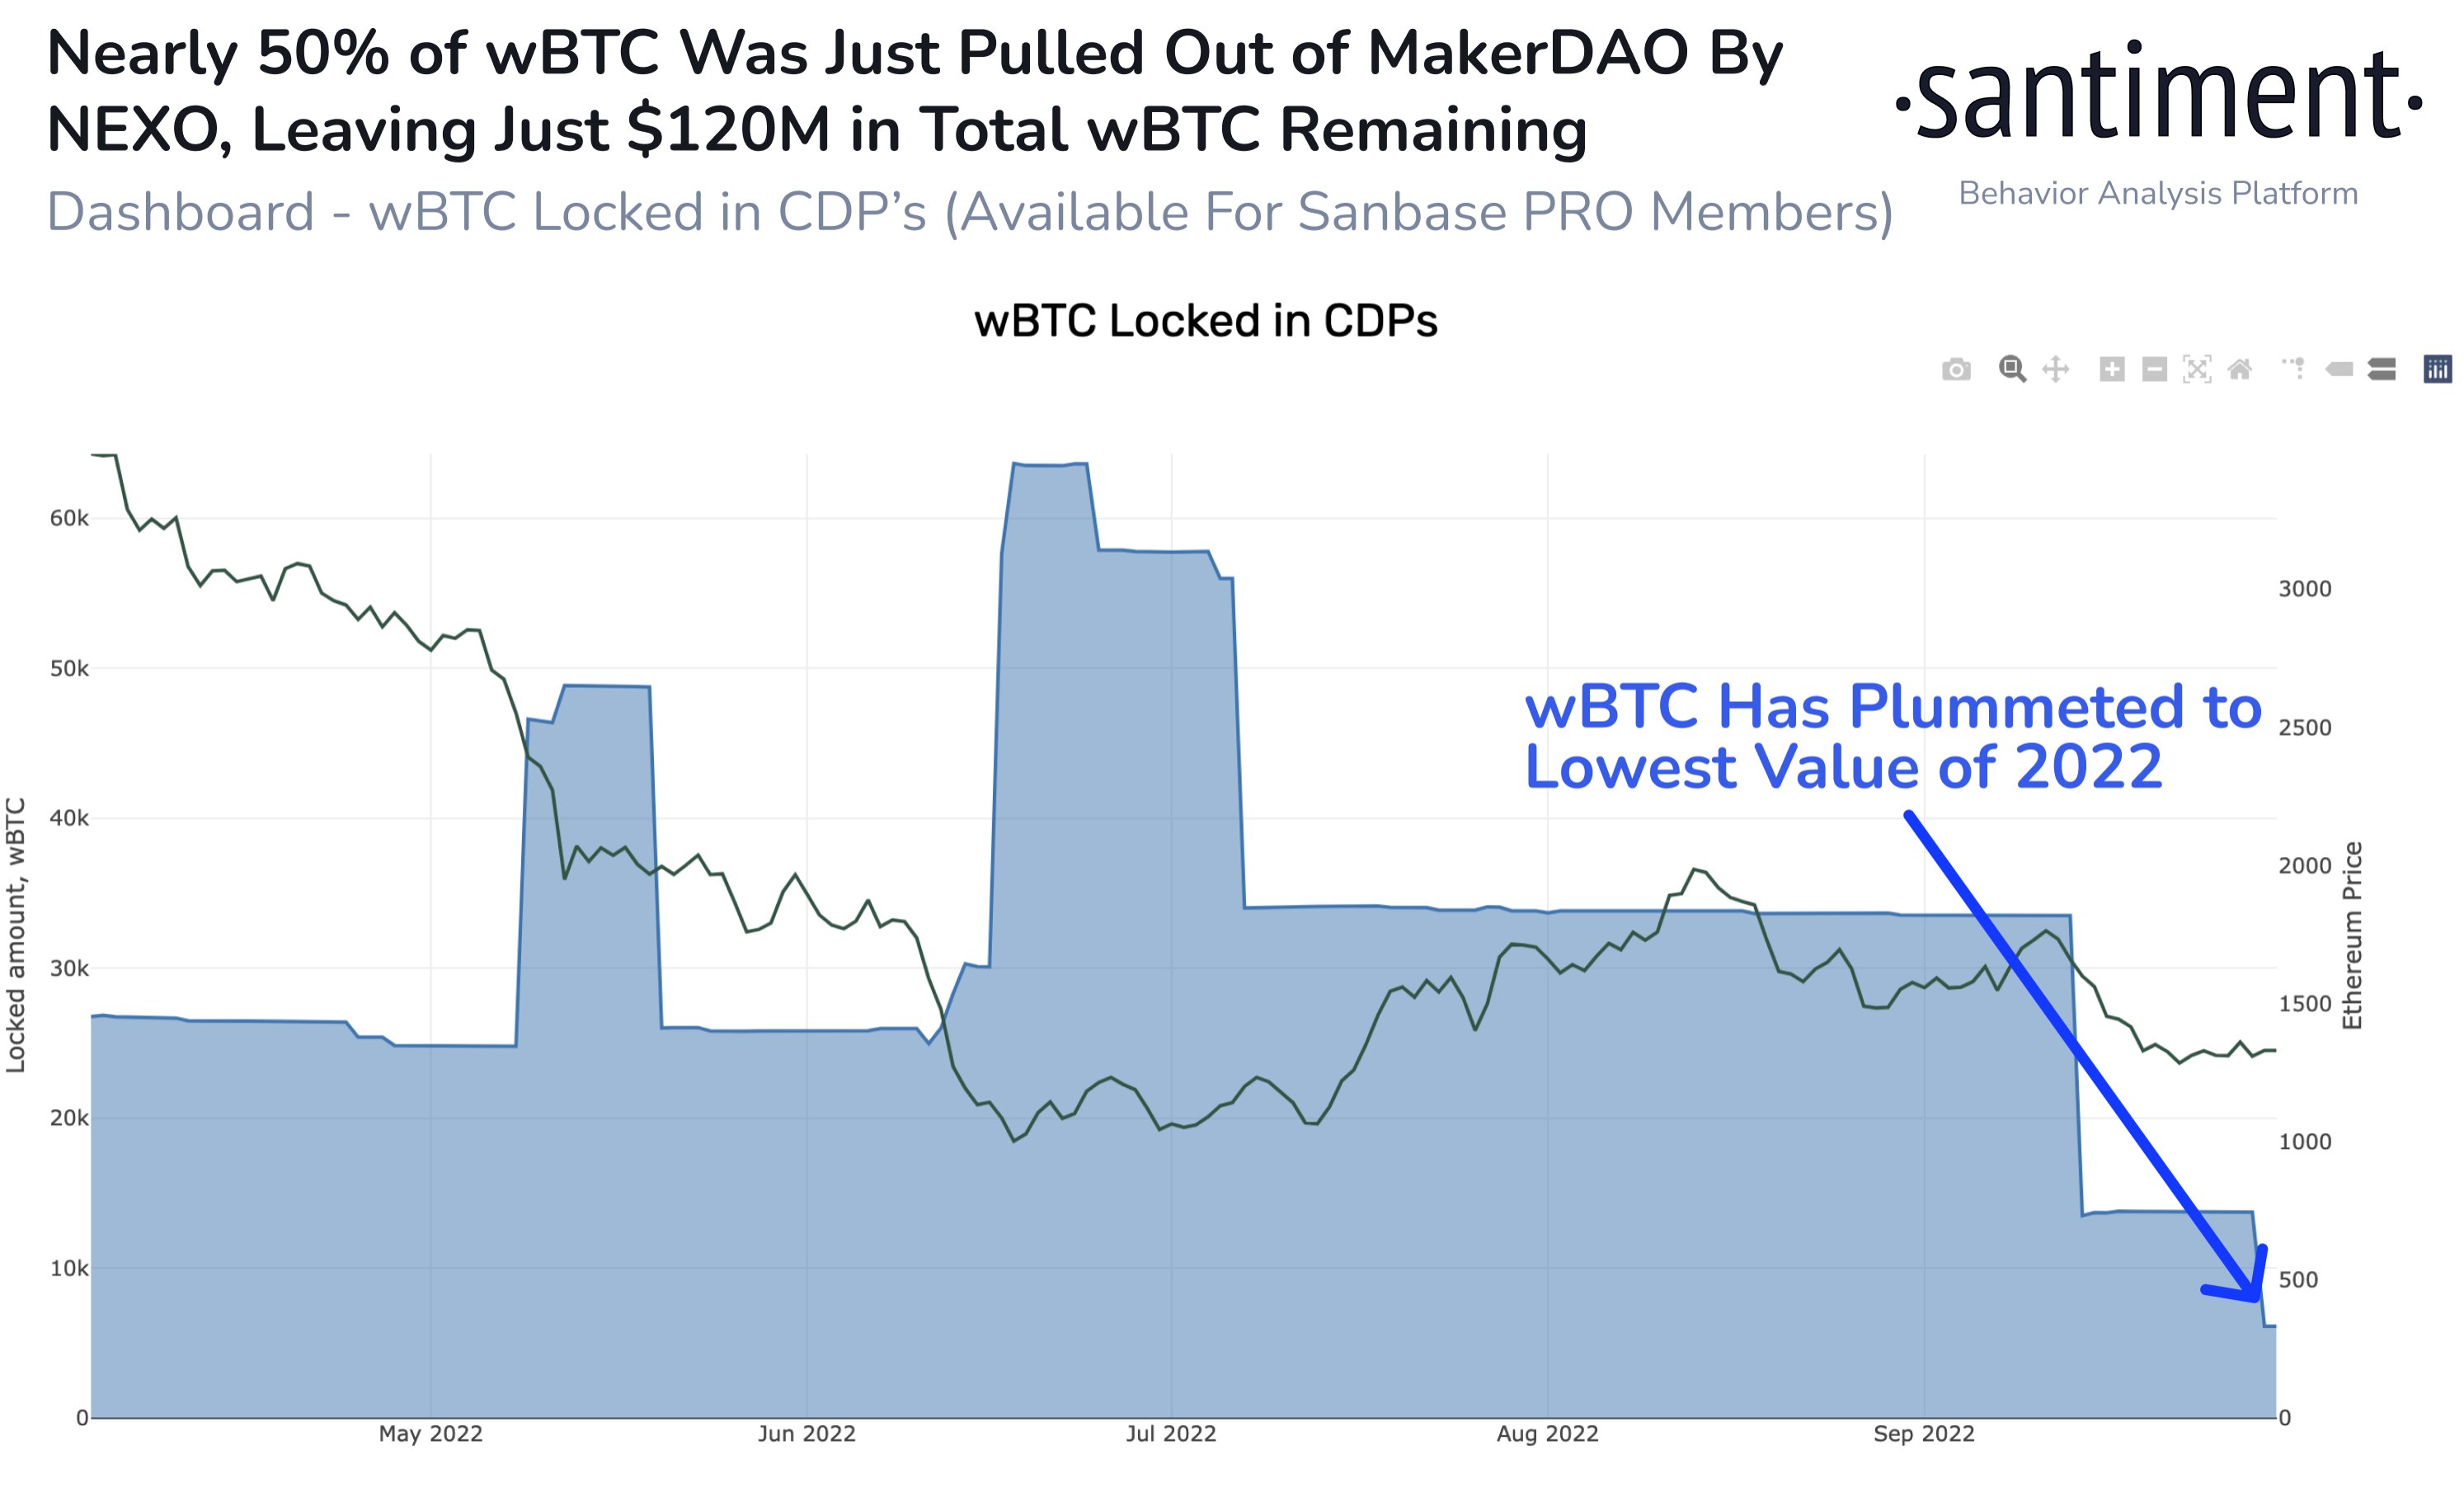 wBTC is locked into CDPs